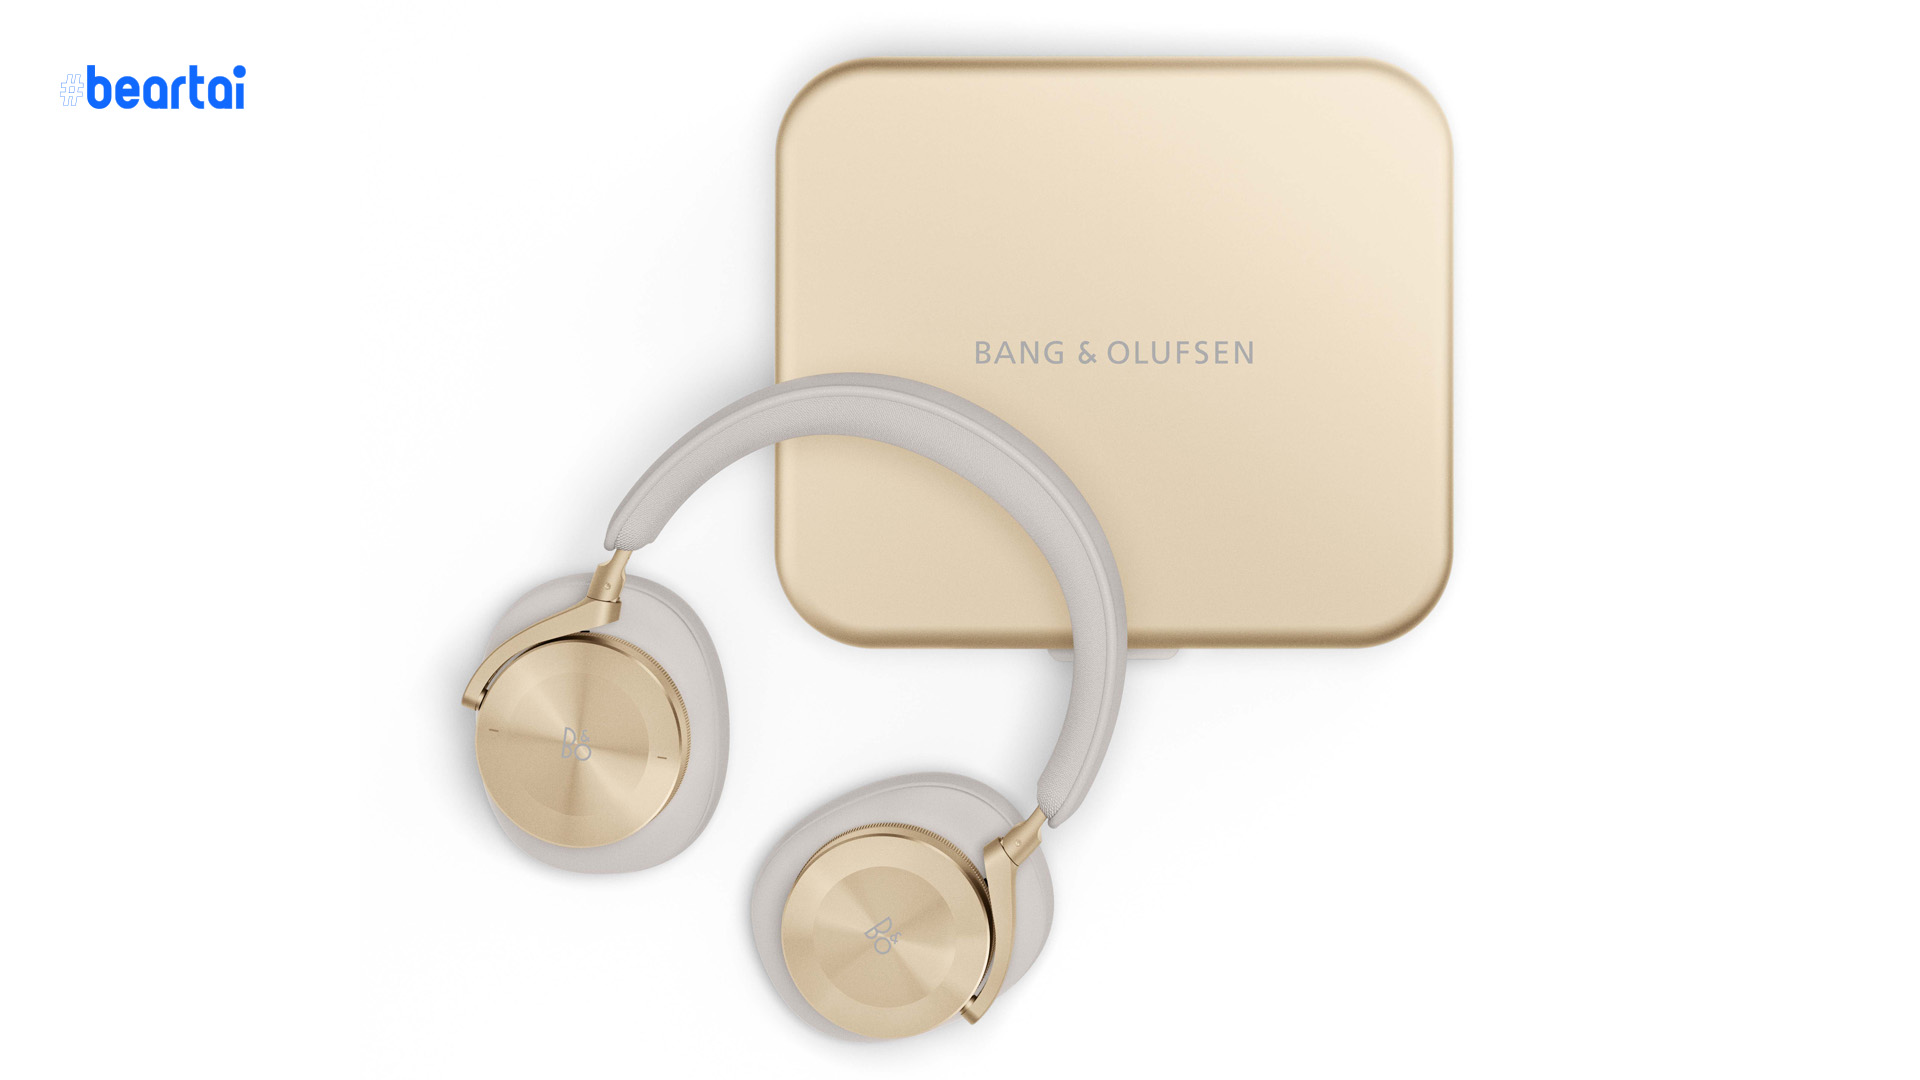 Bang & Olufsen ประกาศเปิดตัว Golden Collection หูฟังคอลเล็คชันสีทอง